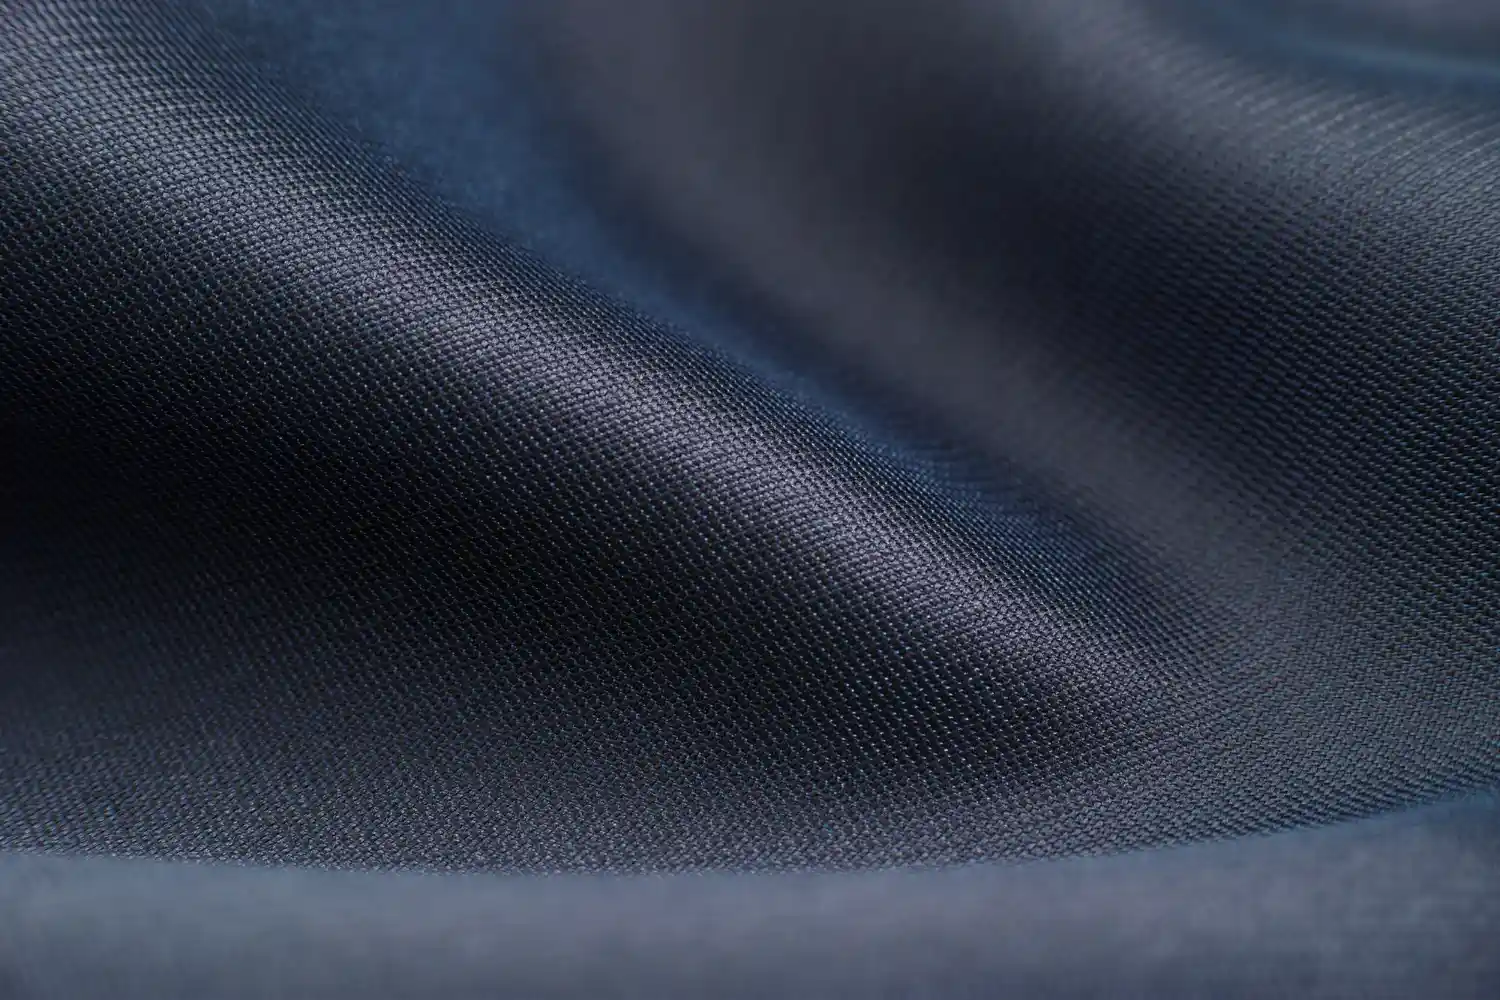 A close up image of a dark Nylon fabric